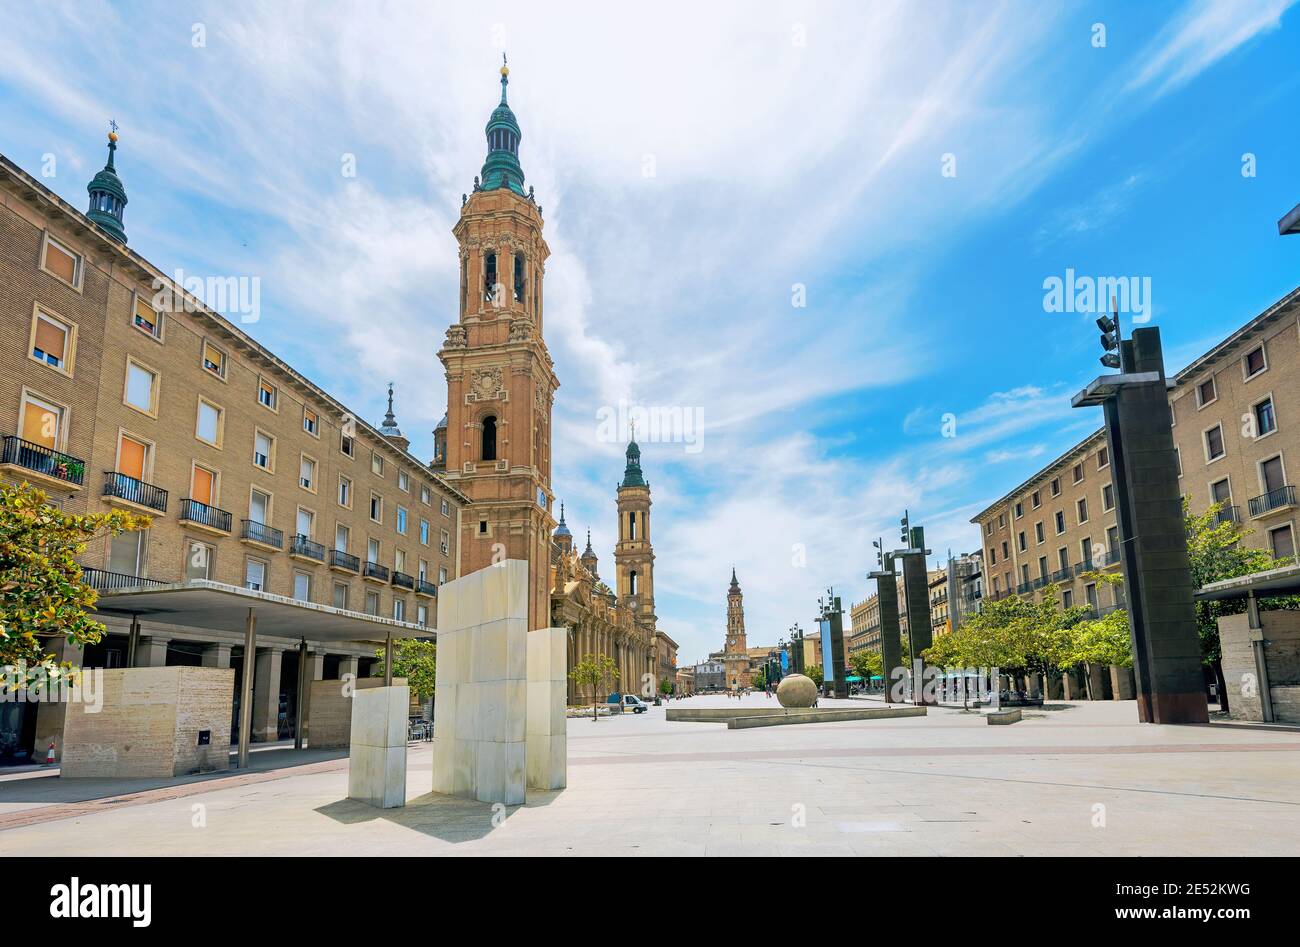 View of Plaza del Pilar square with Town Hall and Basilica de Nuestra Senora del Pilar (Basilica of Our Lady of Pillar). Zaragoza, Spain Stock Photo